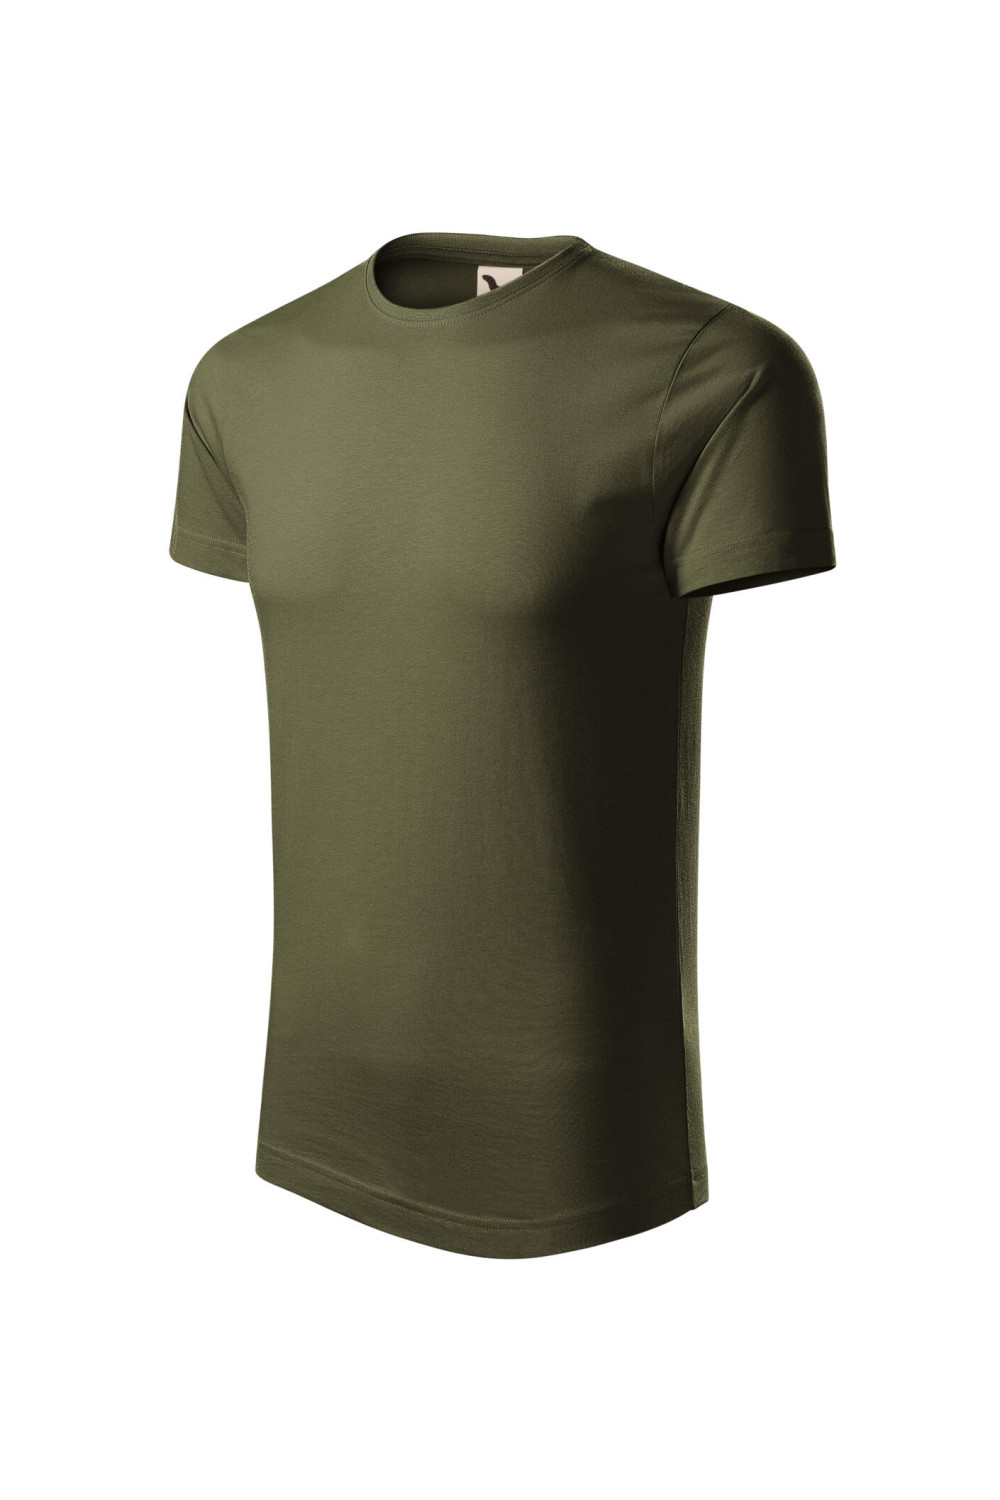 ORIGIN (GOTS) 171 MALFINI ADLER Koszulka męska t-shirt military